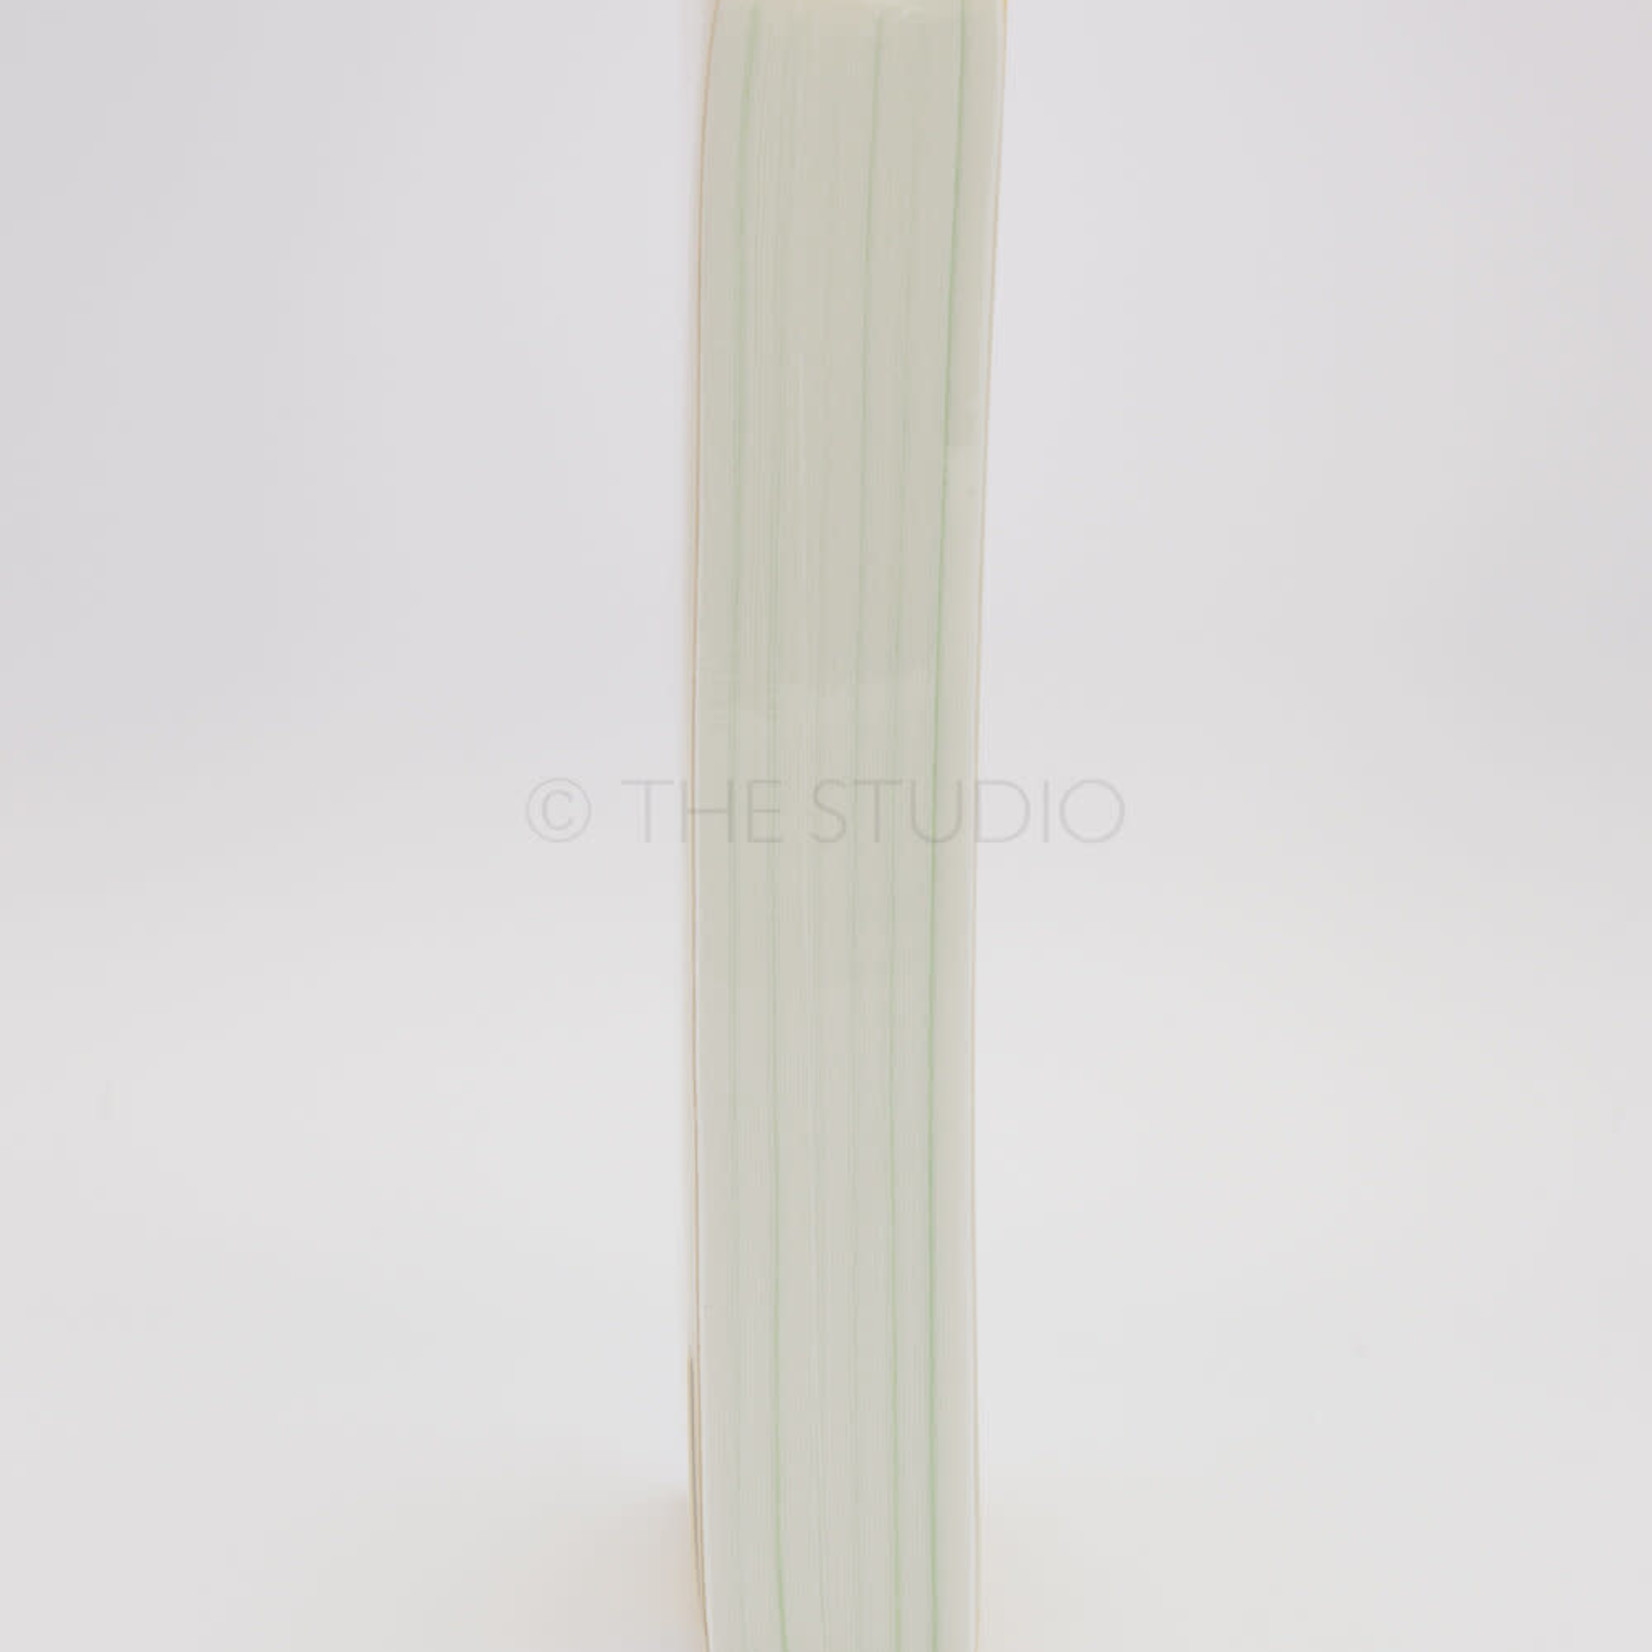 GiGi GiGi - Cloth Epilating Strips - Large 3" x 9" - 100 count